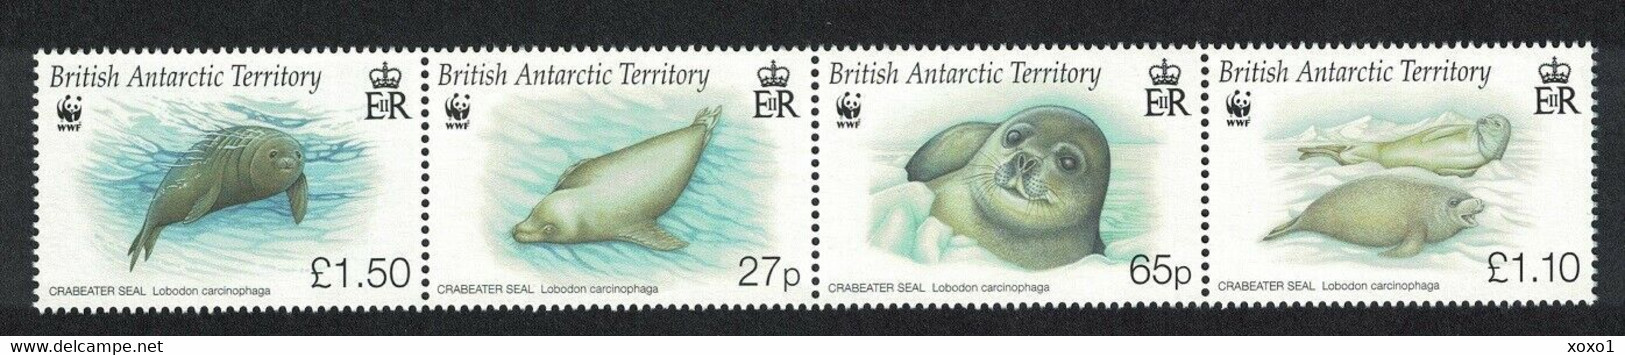 British Antarctic Territory (BAT) 2009 MiNr. 505 - 508 WWF Marine Life Crabeater Seal 4v  MNH**  20.00 € - Nuovi